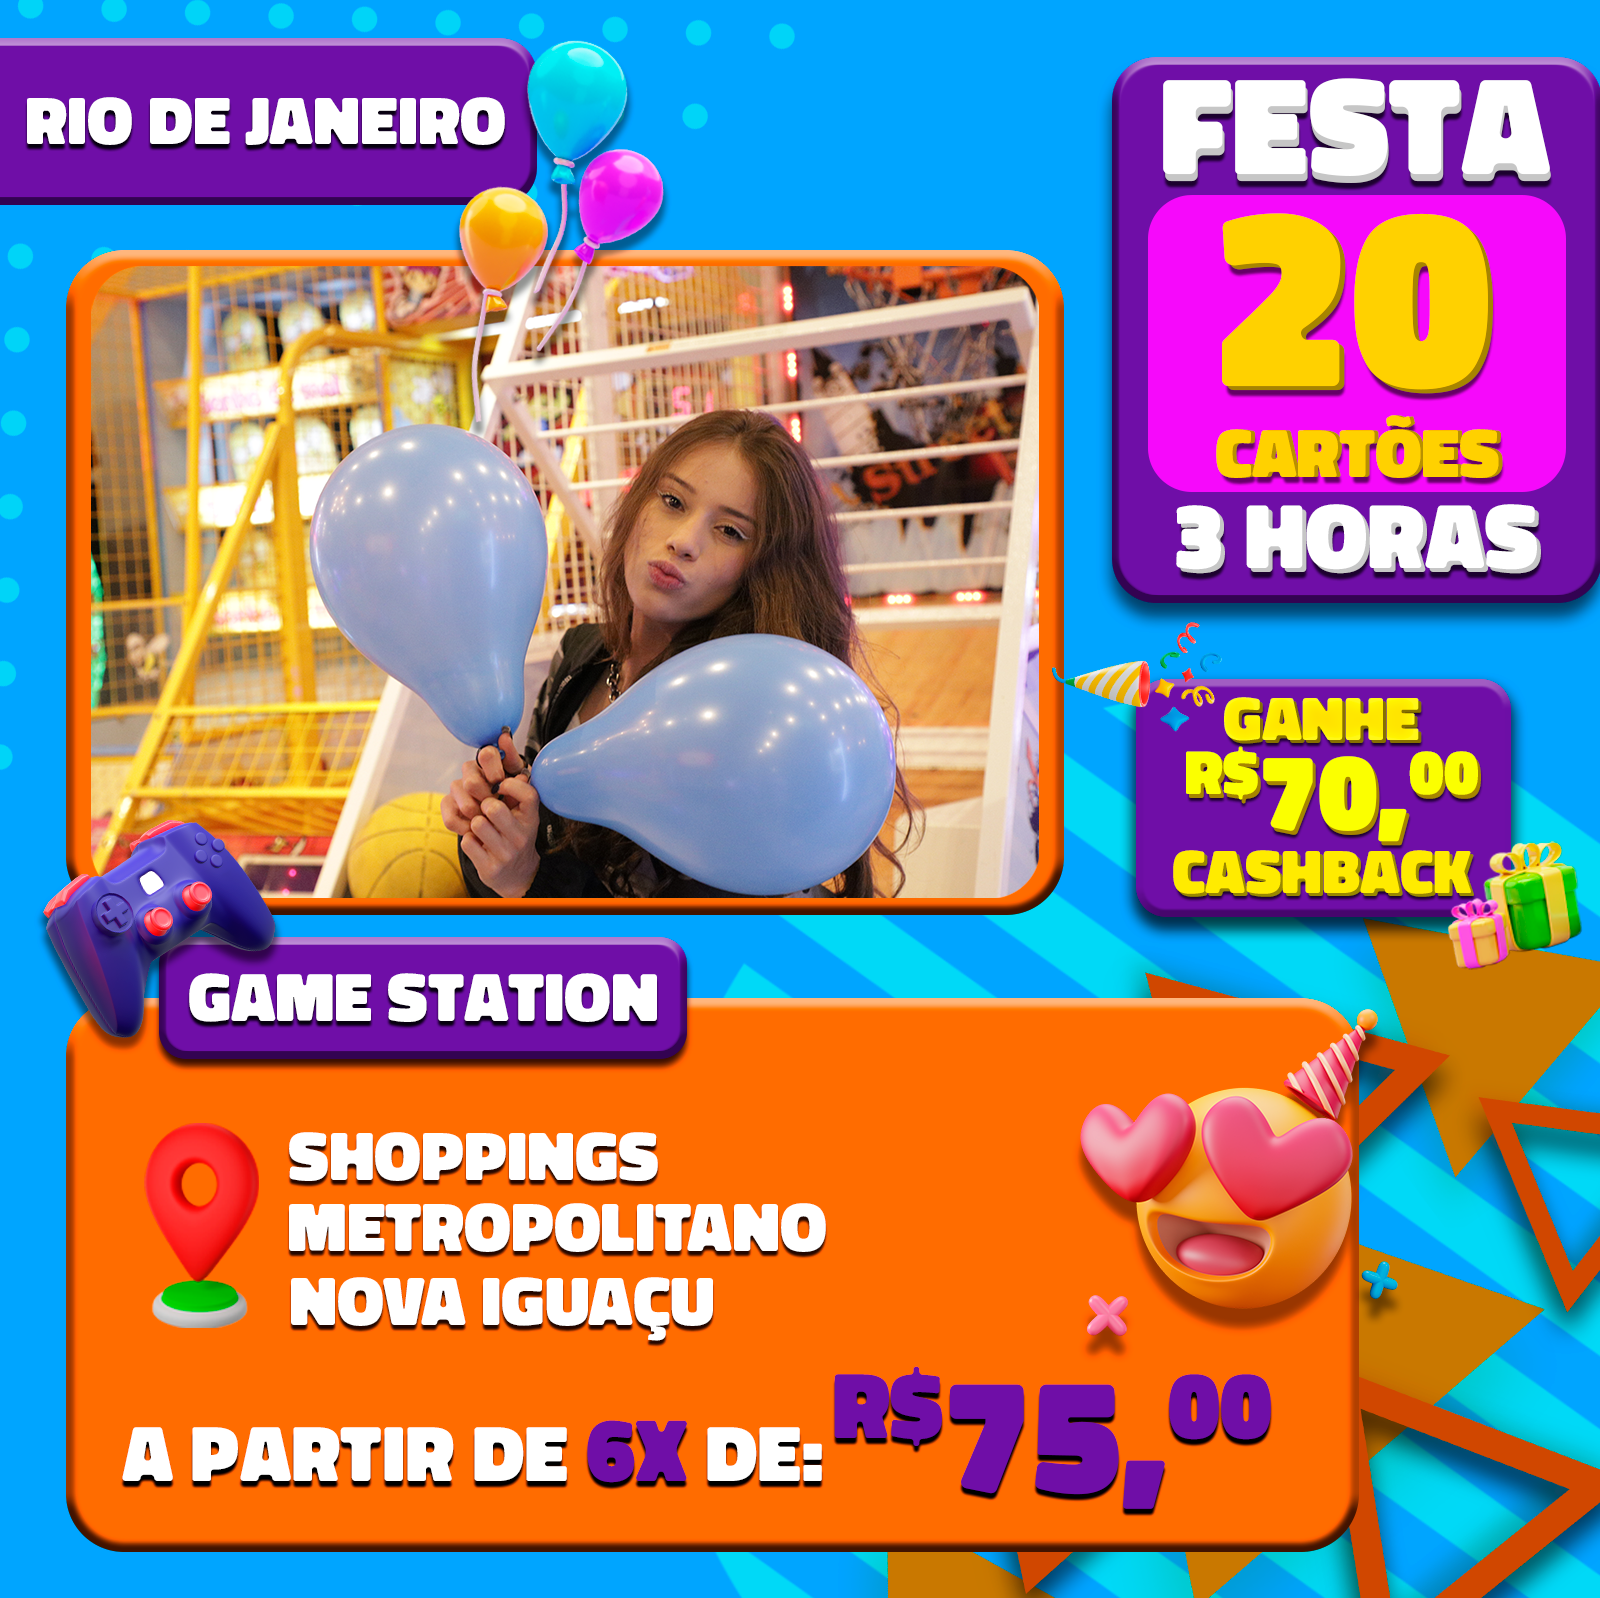 Game Station - Lojas - Shopping Guararapes